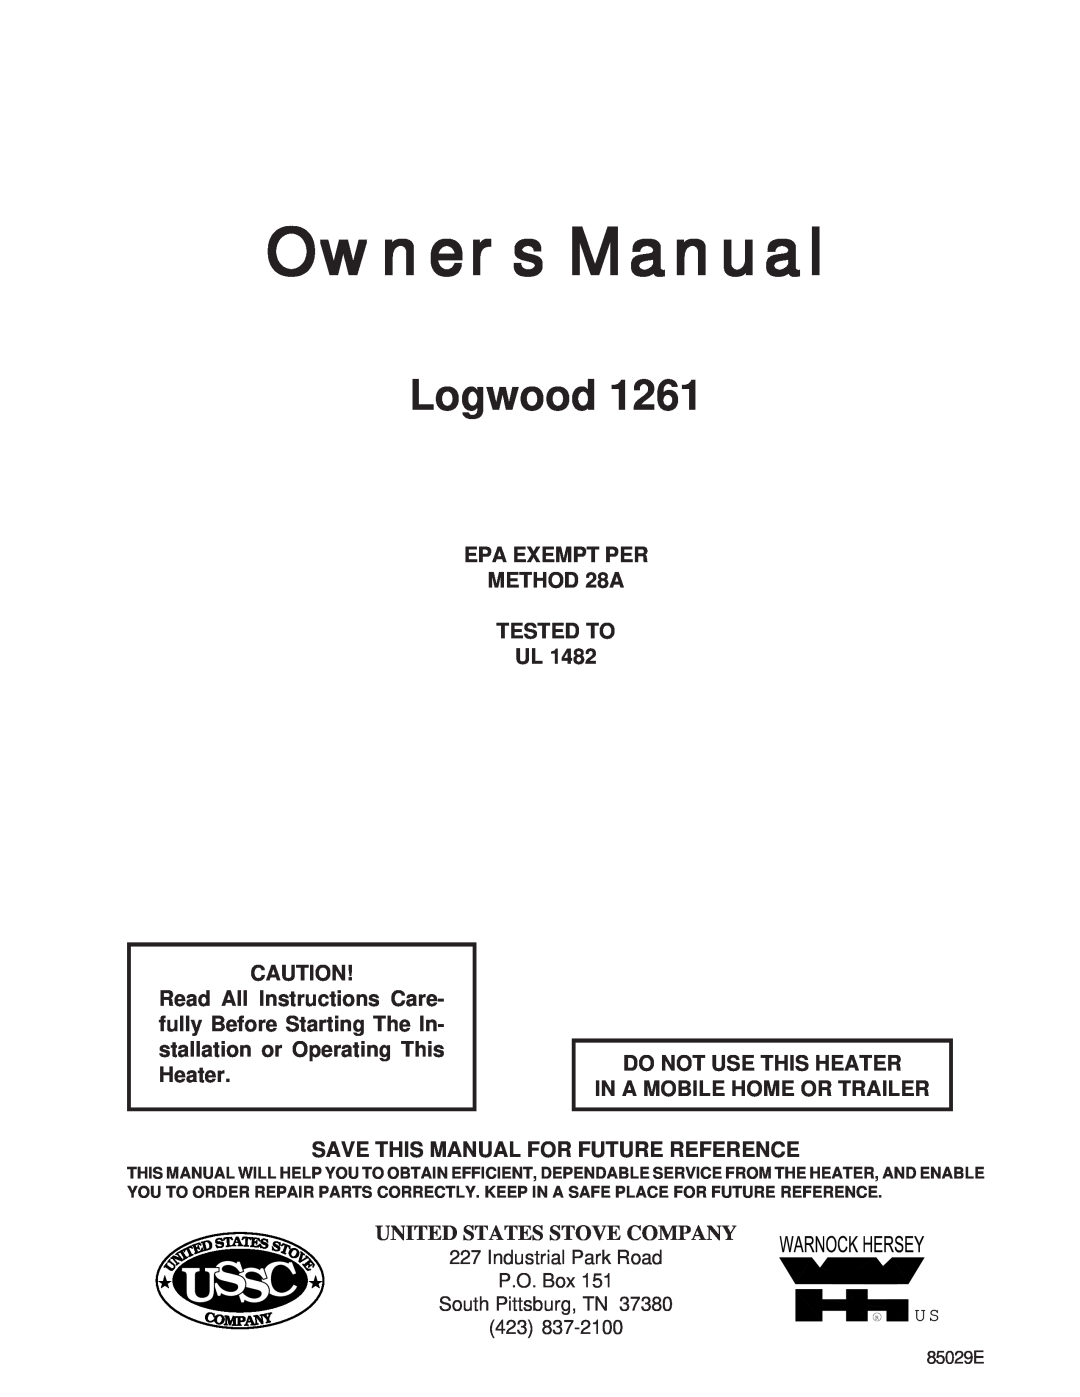 United States Stove 1261 owner manual Ussc, Logwood 